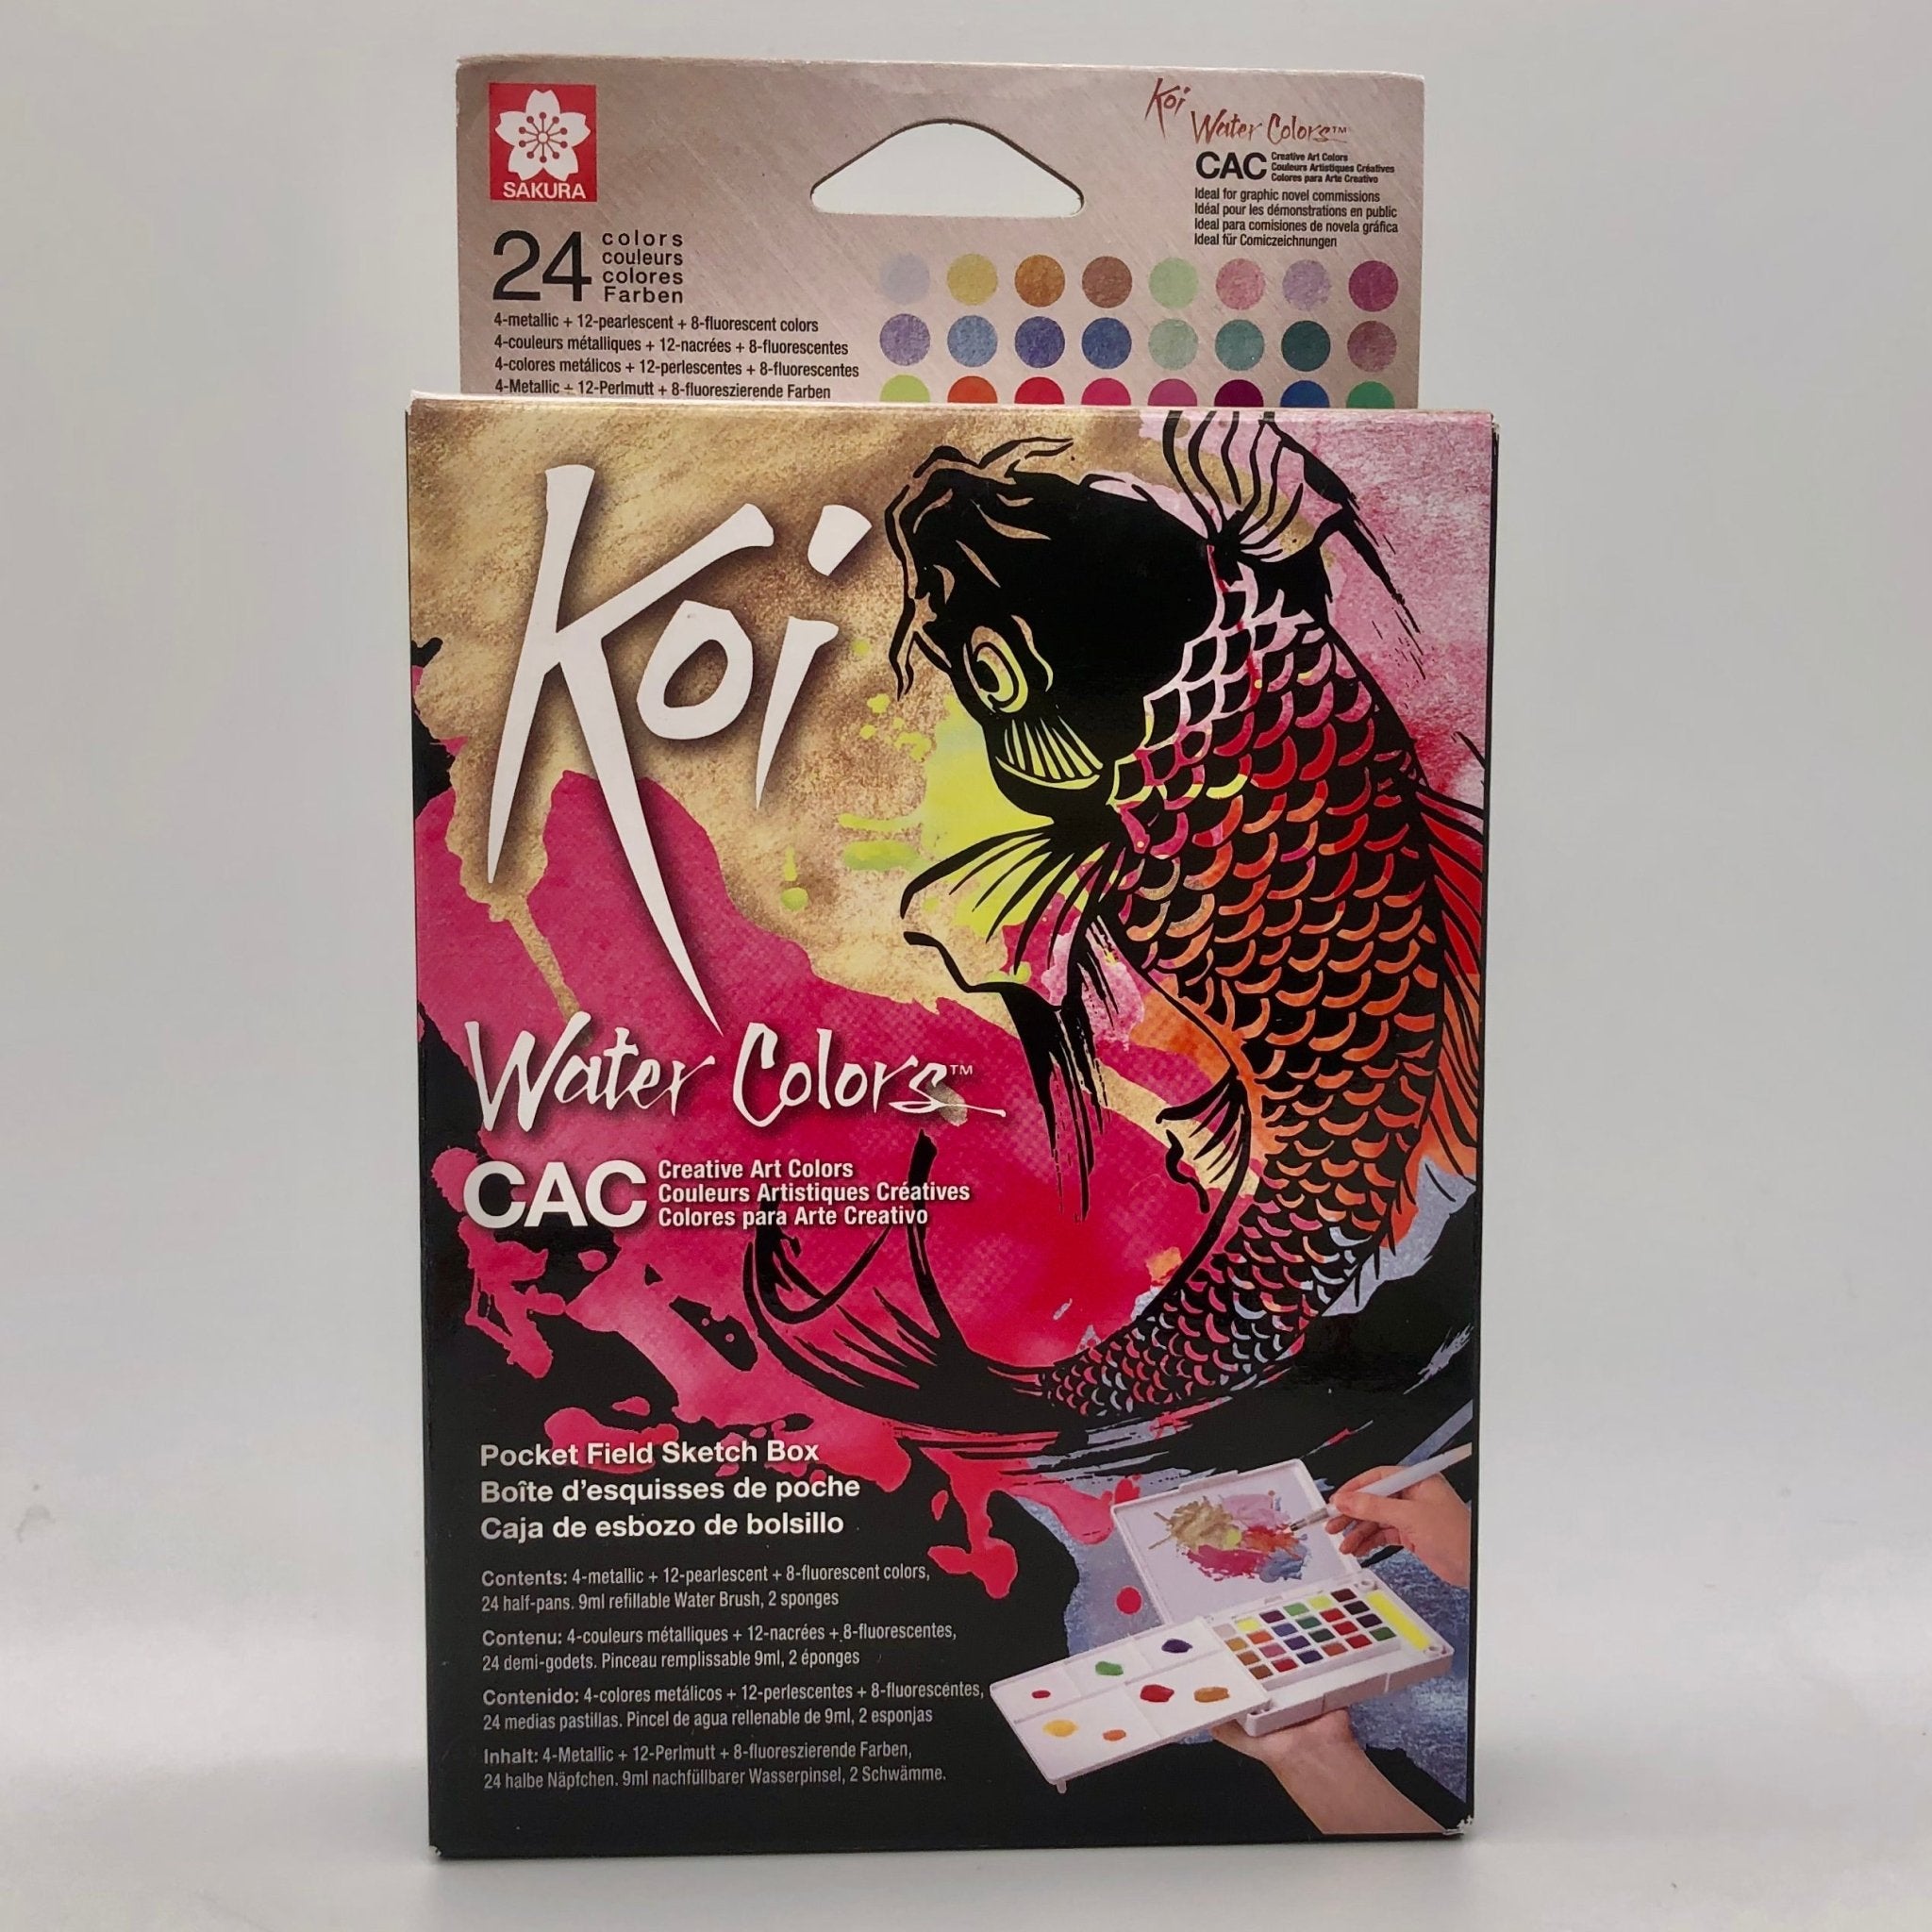 Koi Metallic Watercolors – The Regal Find